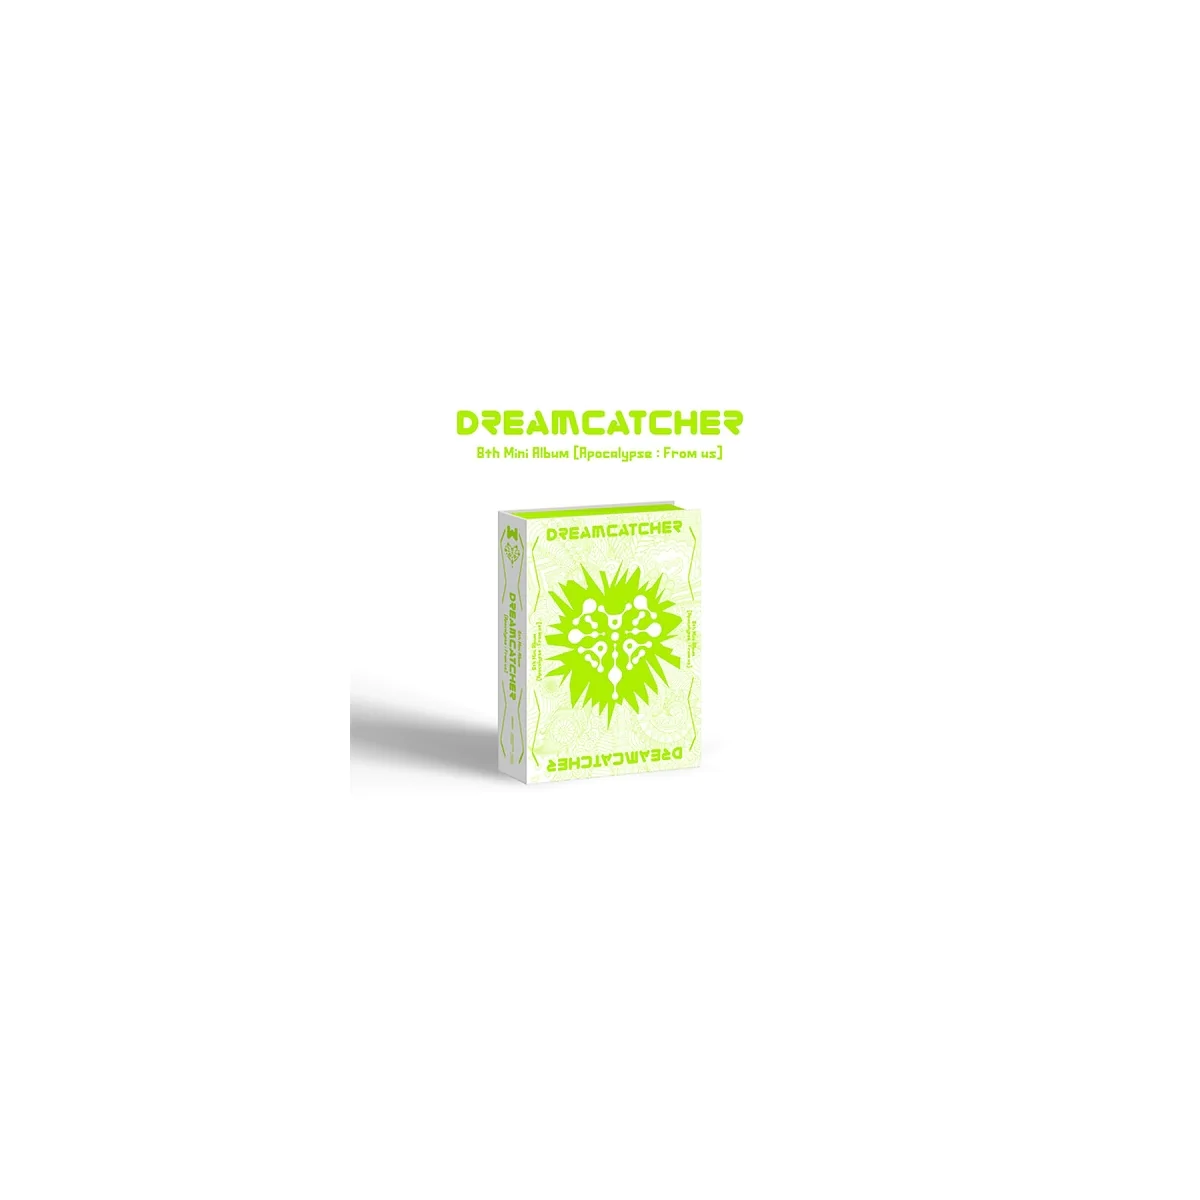 Dreamcatcher - Apocalypse: From us (W Version Limited Edition) (8th Mini Album) 